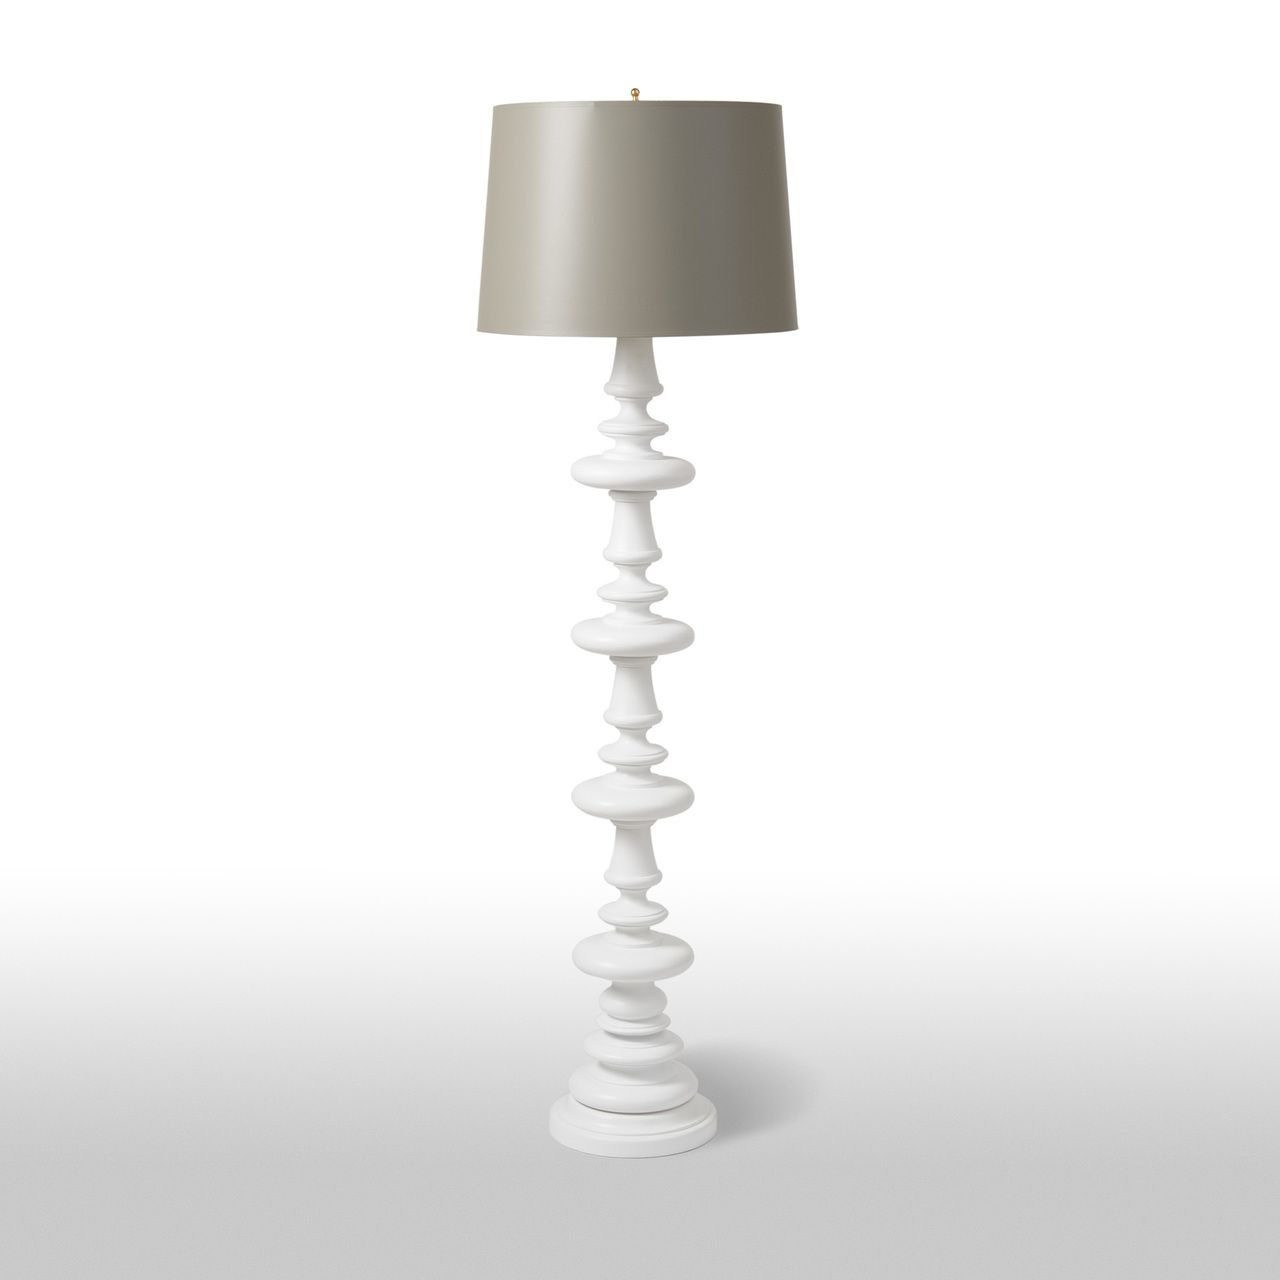 Turned Floor Lamp Tall White Barbara Cosgrove Lamps Tall regarding measurements 1280 X 1280